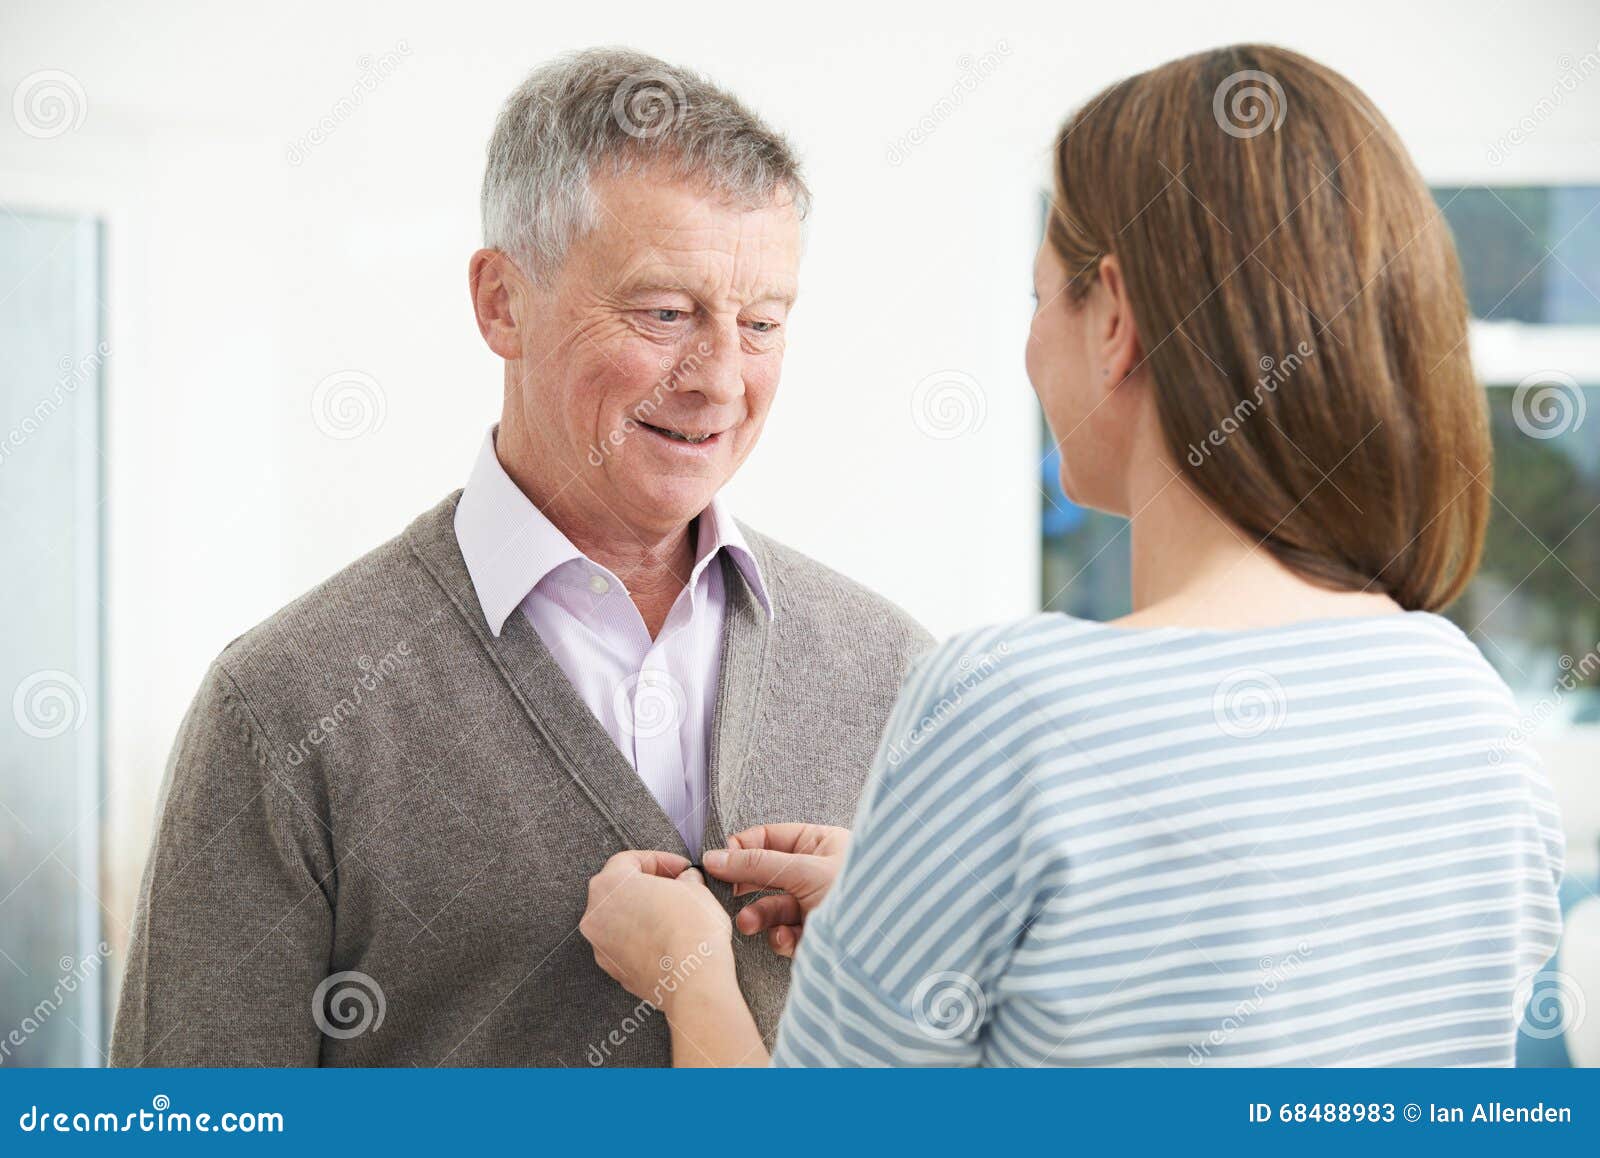 adult daughter helping senior man to button cardigan